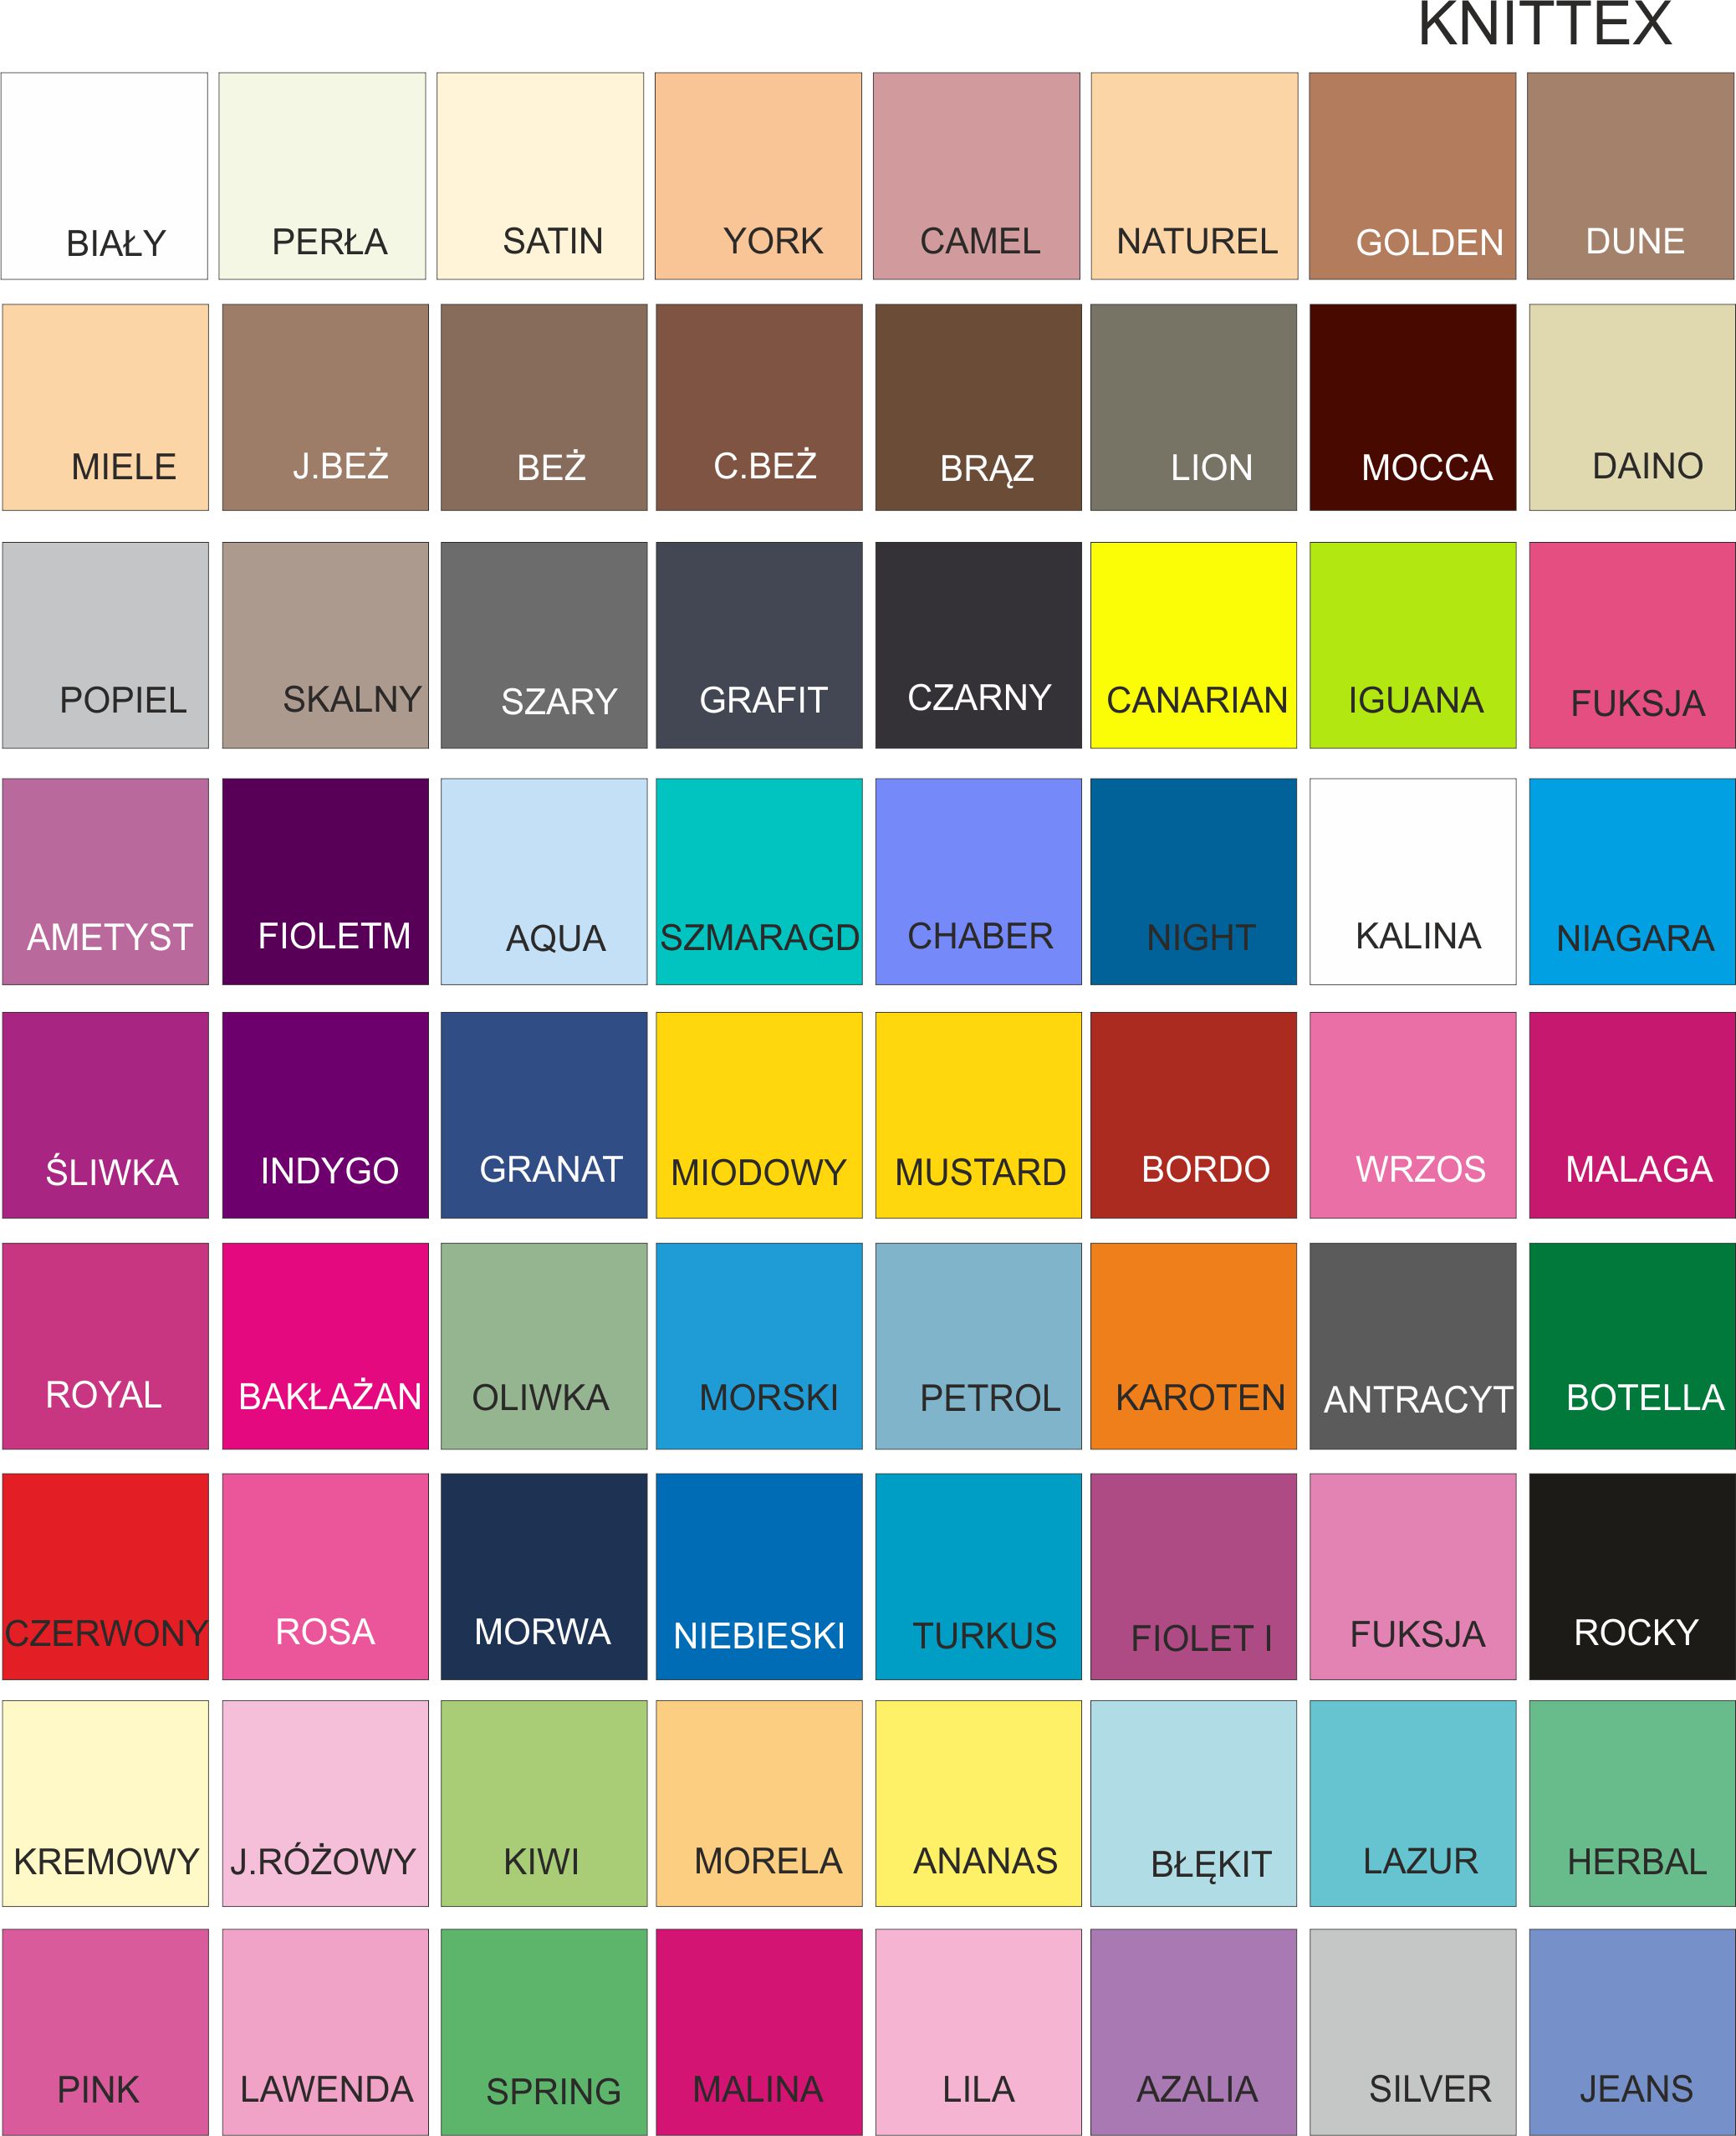 Knittex tabela kolorów